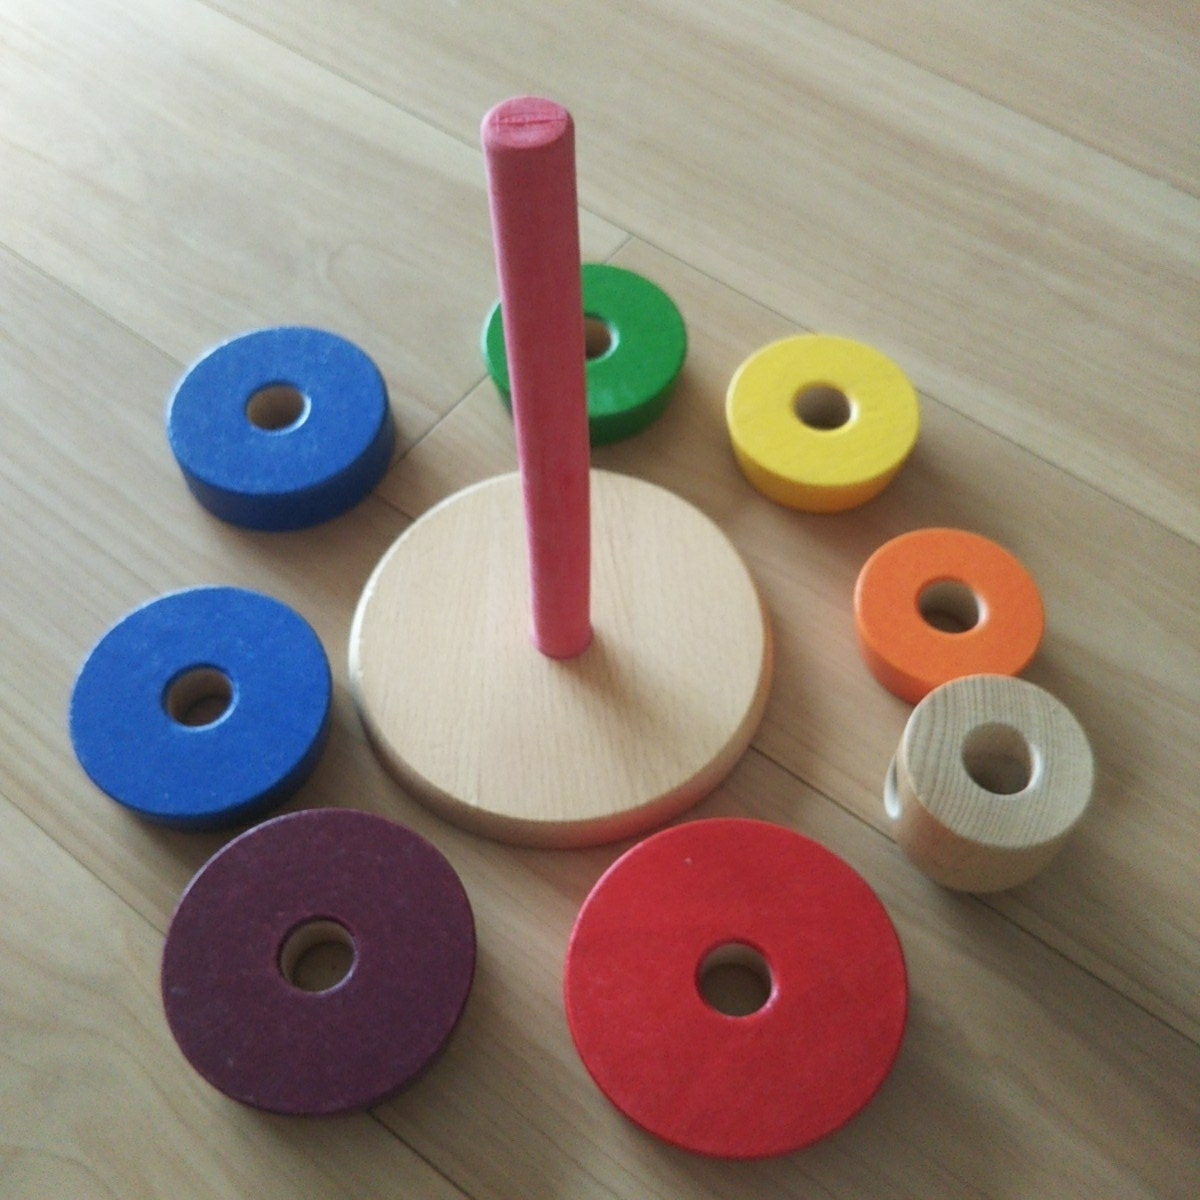 IKEA 幼児 玩具 おもちゃ カラフル 穴通し 木製 手先器用さ 形認識 物の重さや重なりあう時の音認識 感性豊かに_画像4